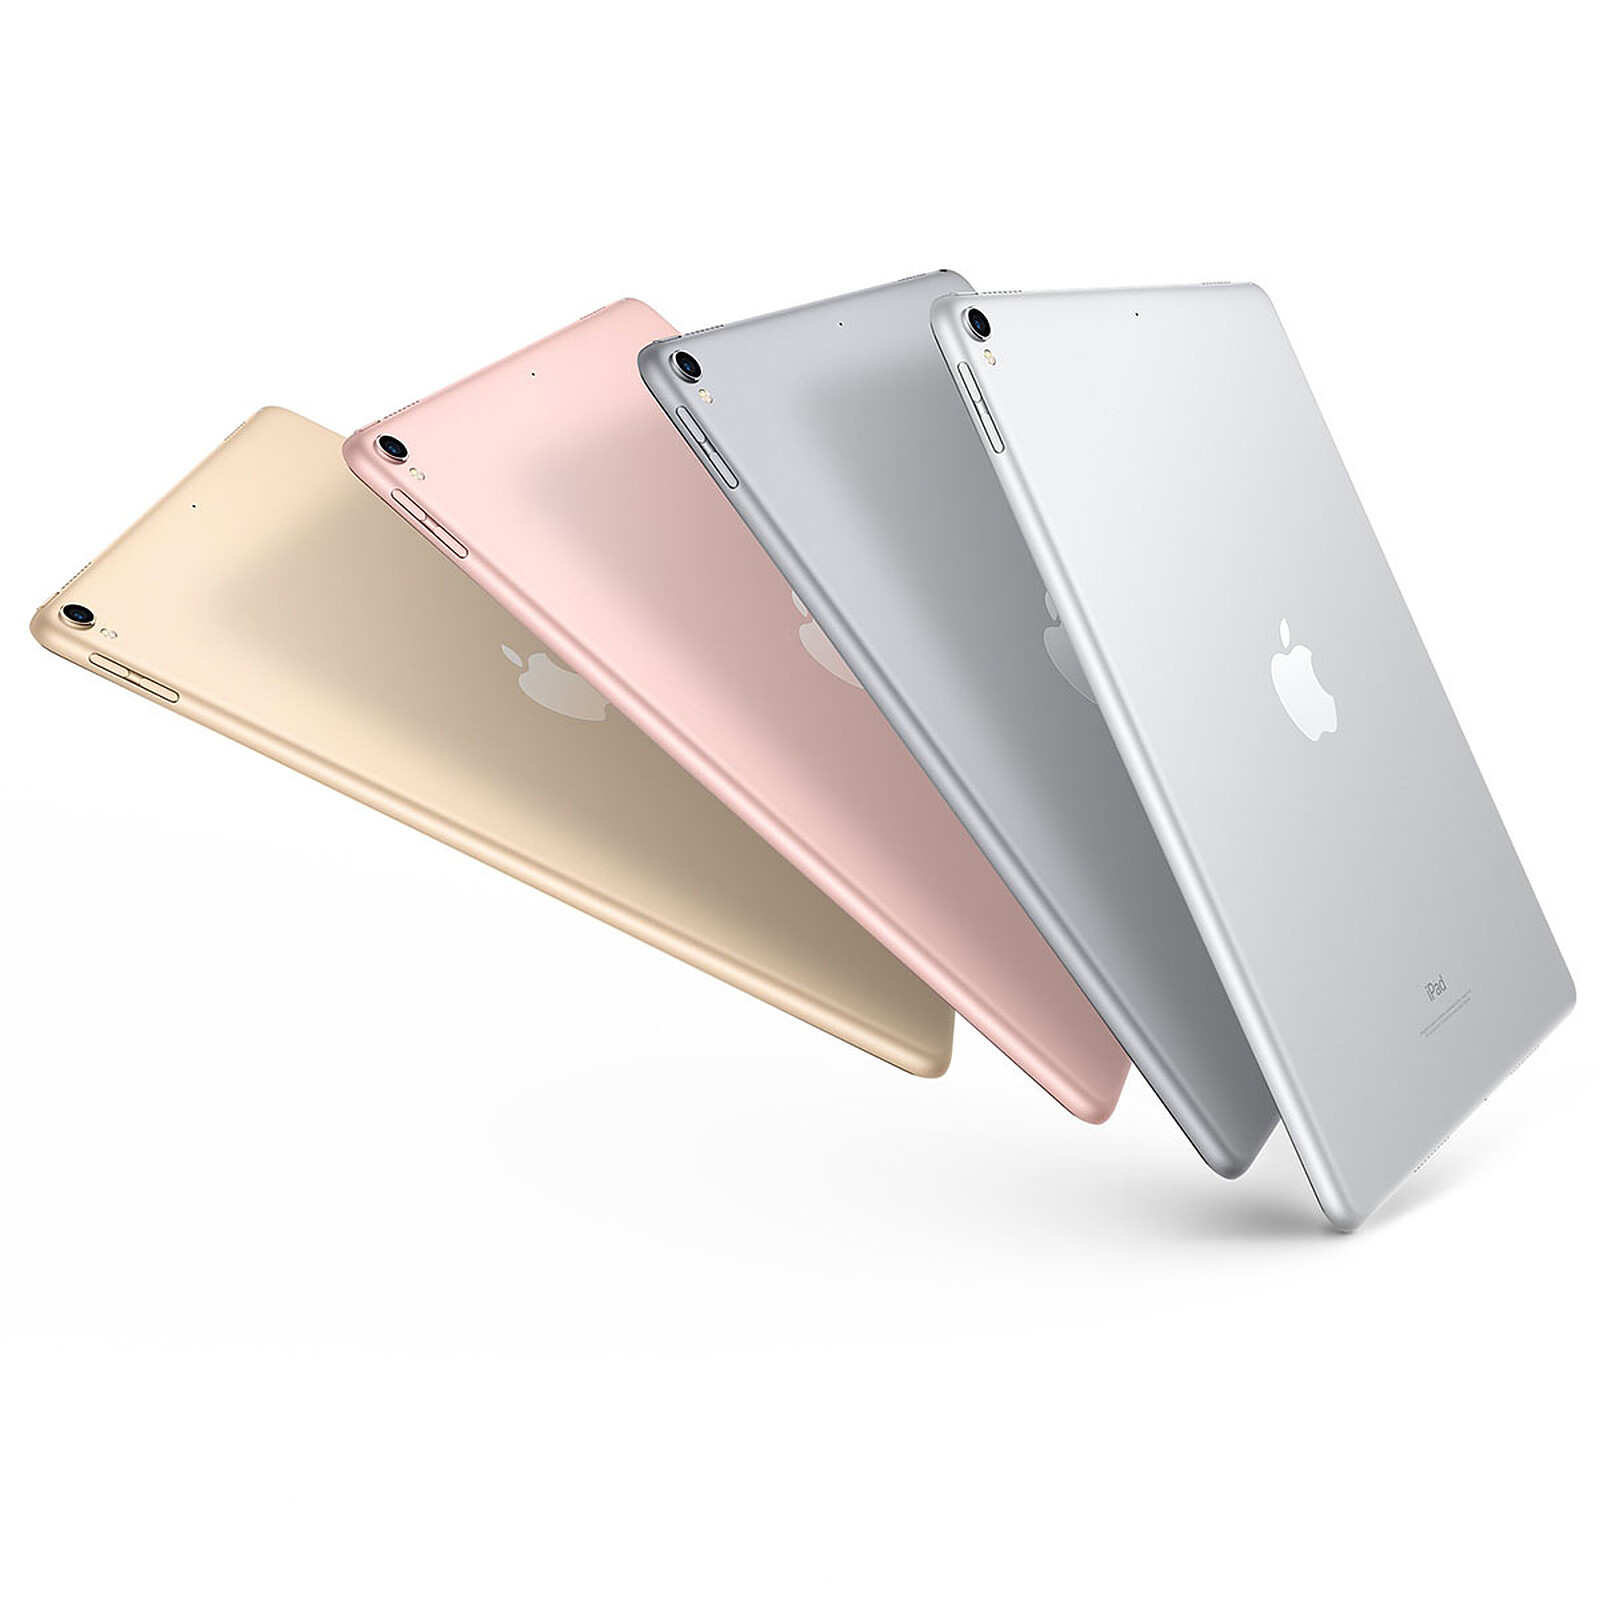 Apple iPad Pro 10.5 inch 256GB Wi-Fi Silver - Tablet computer 